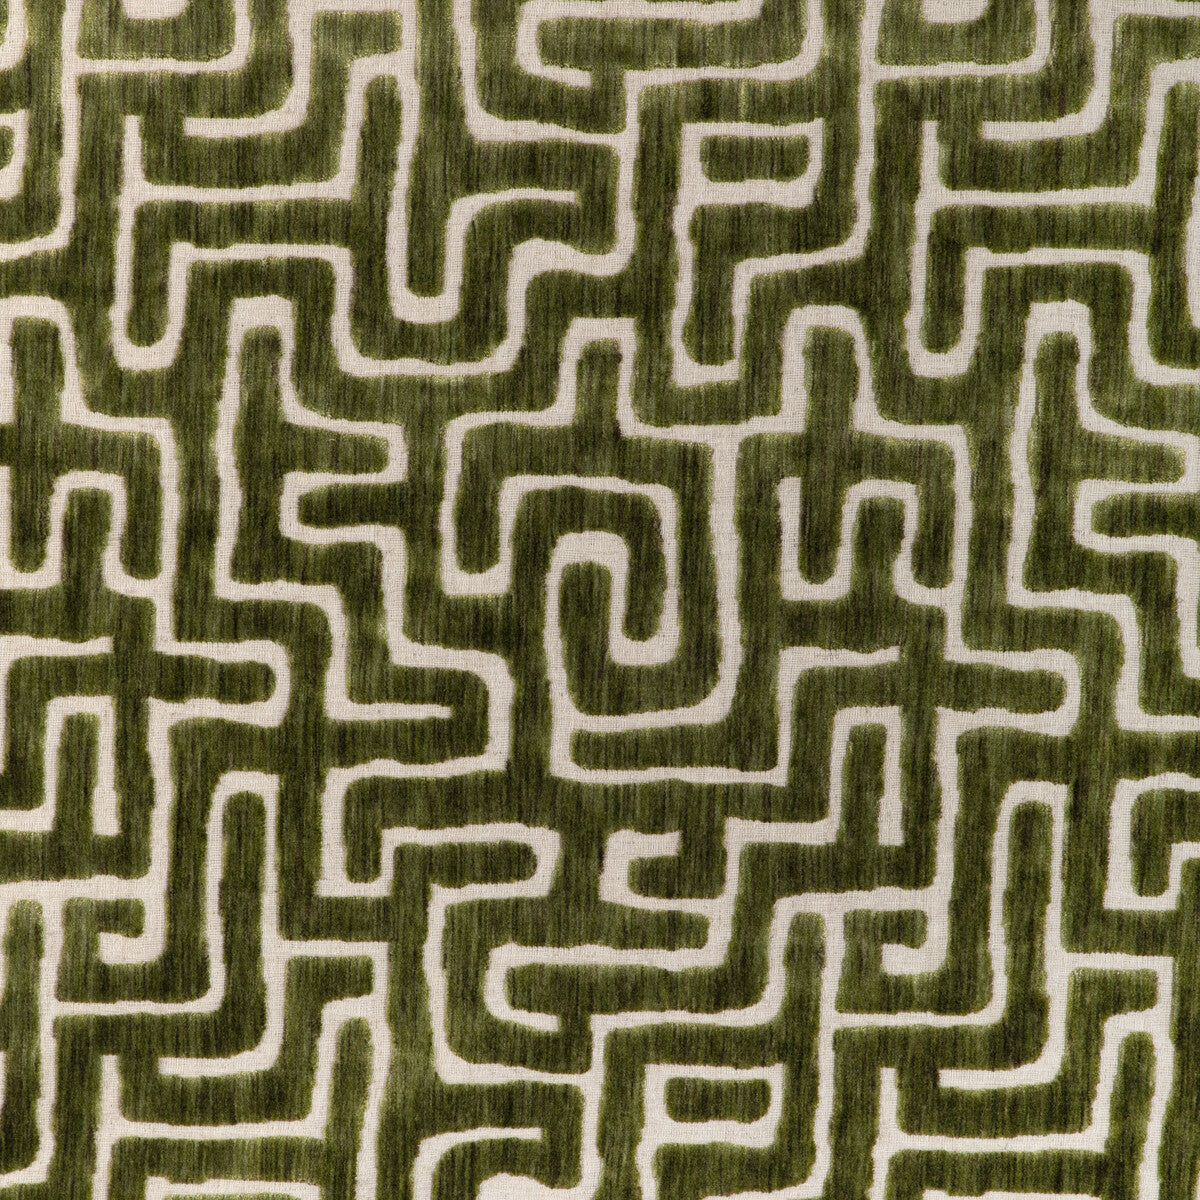 Kravet Design fabric in 35721-3 color - pattern 35721.3.0 - by Kravet Design in the Modern Velvets collection